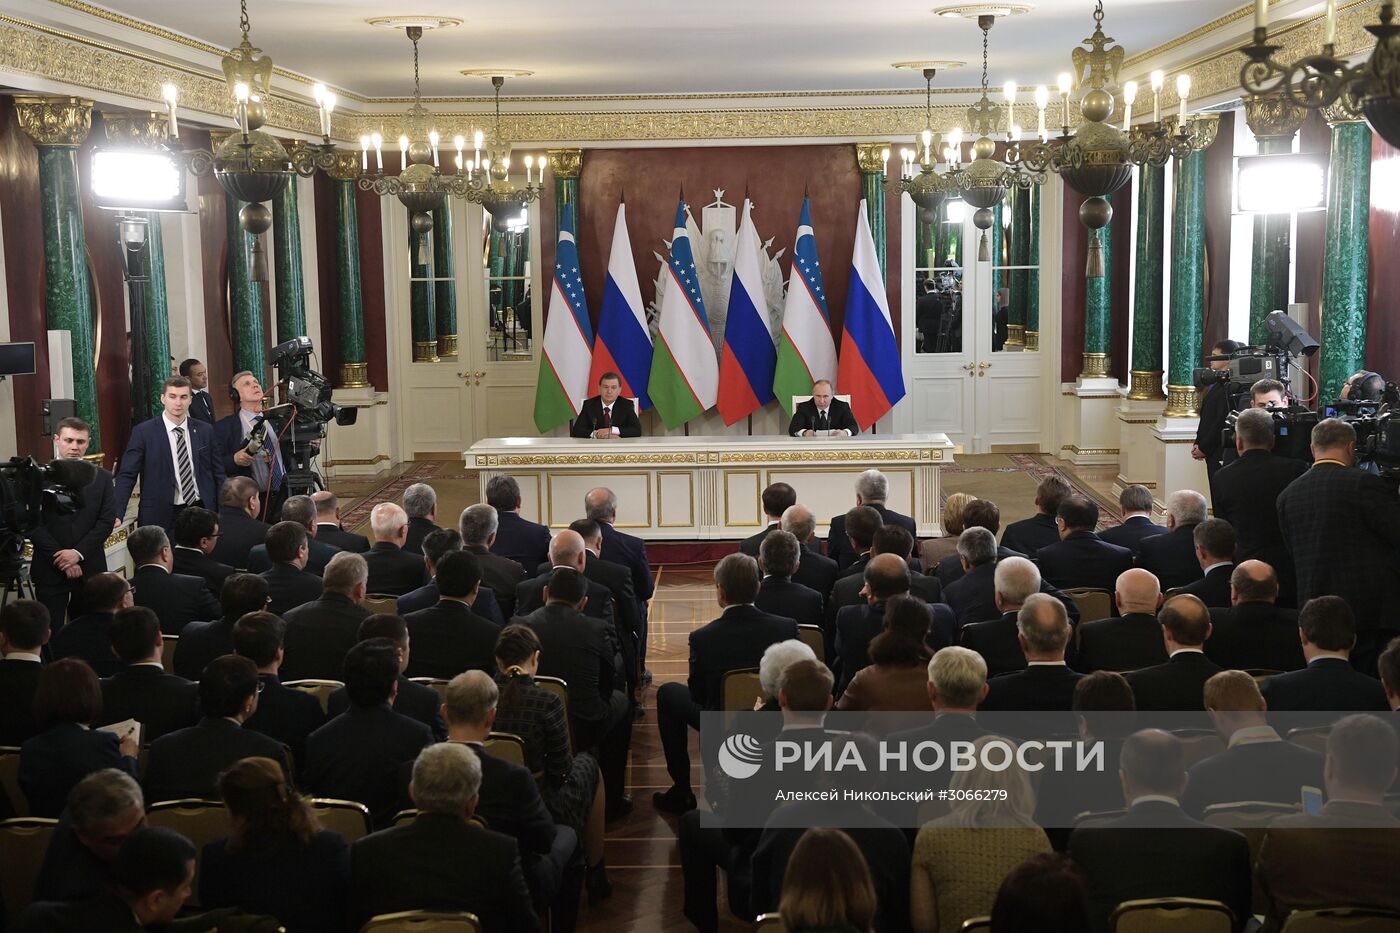 Президент РФ В. Путин встретился с президентом Узбекистана Ш. Мирзиеевым